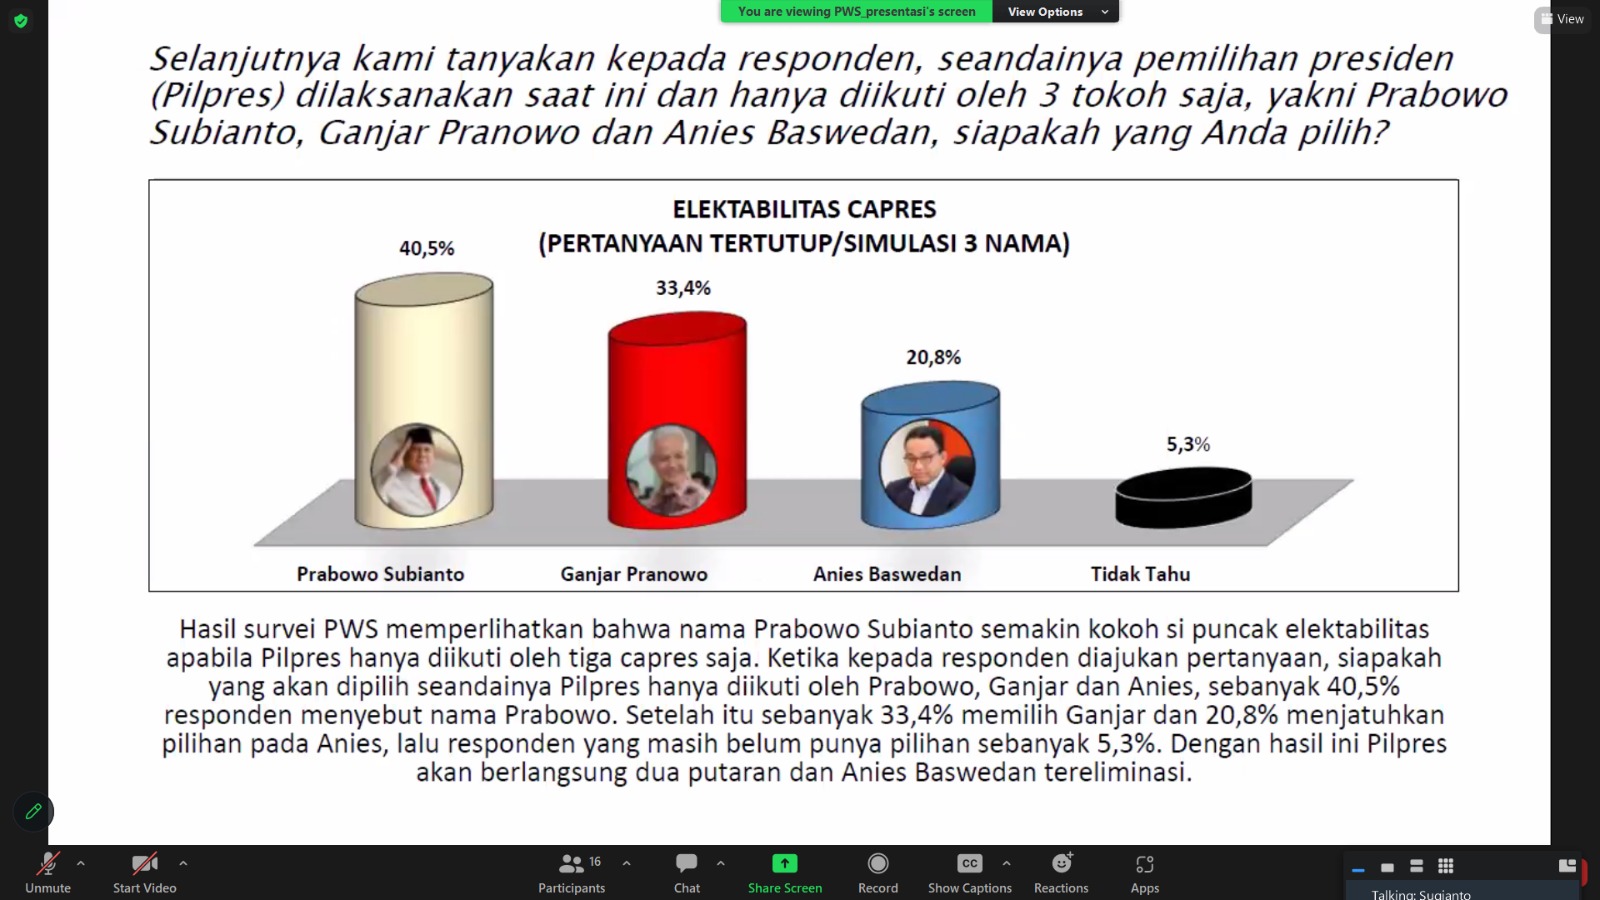 Head To Head, Prabowo Subianto Menang Atas Ganjar dan Anies